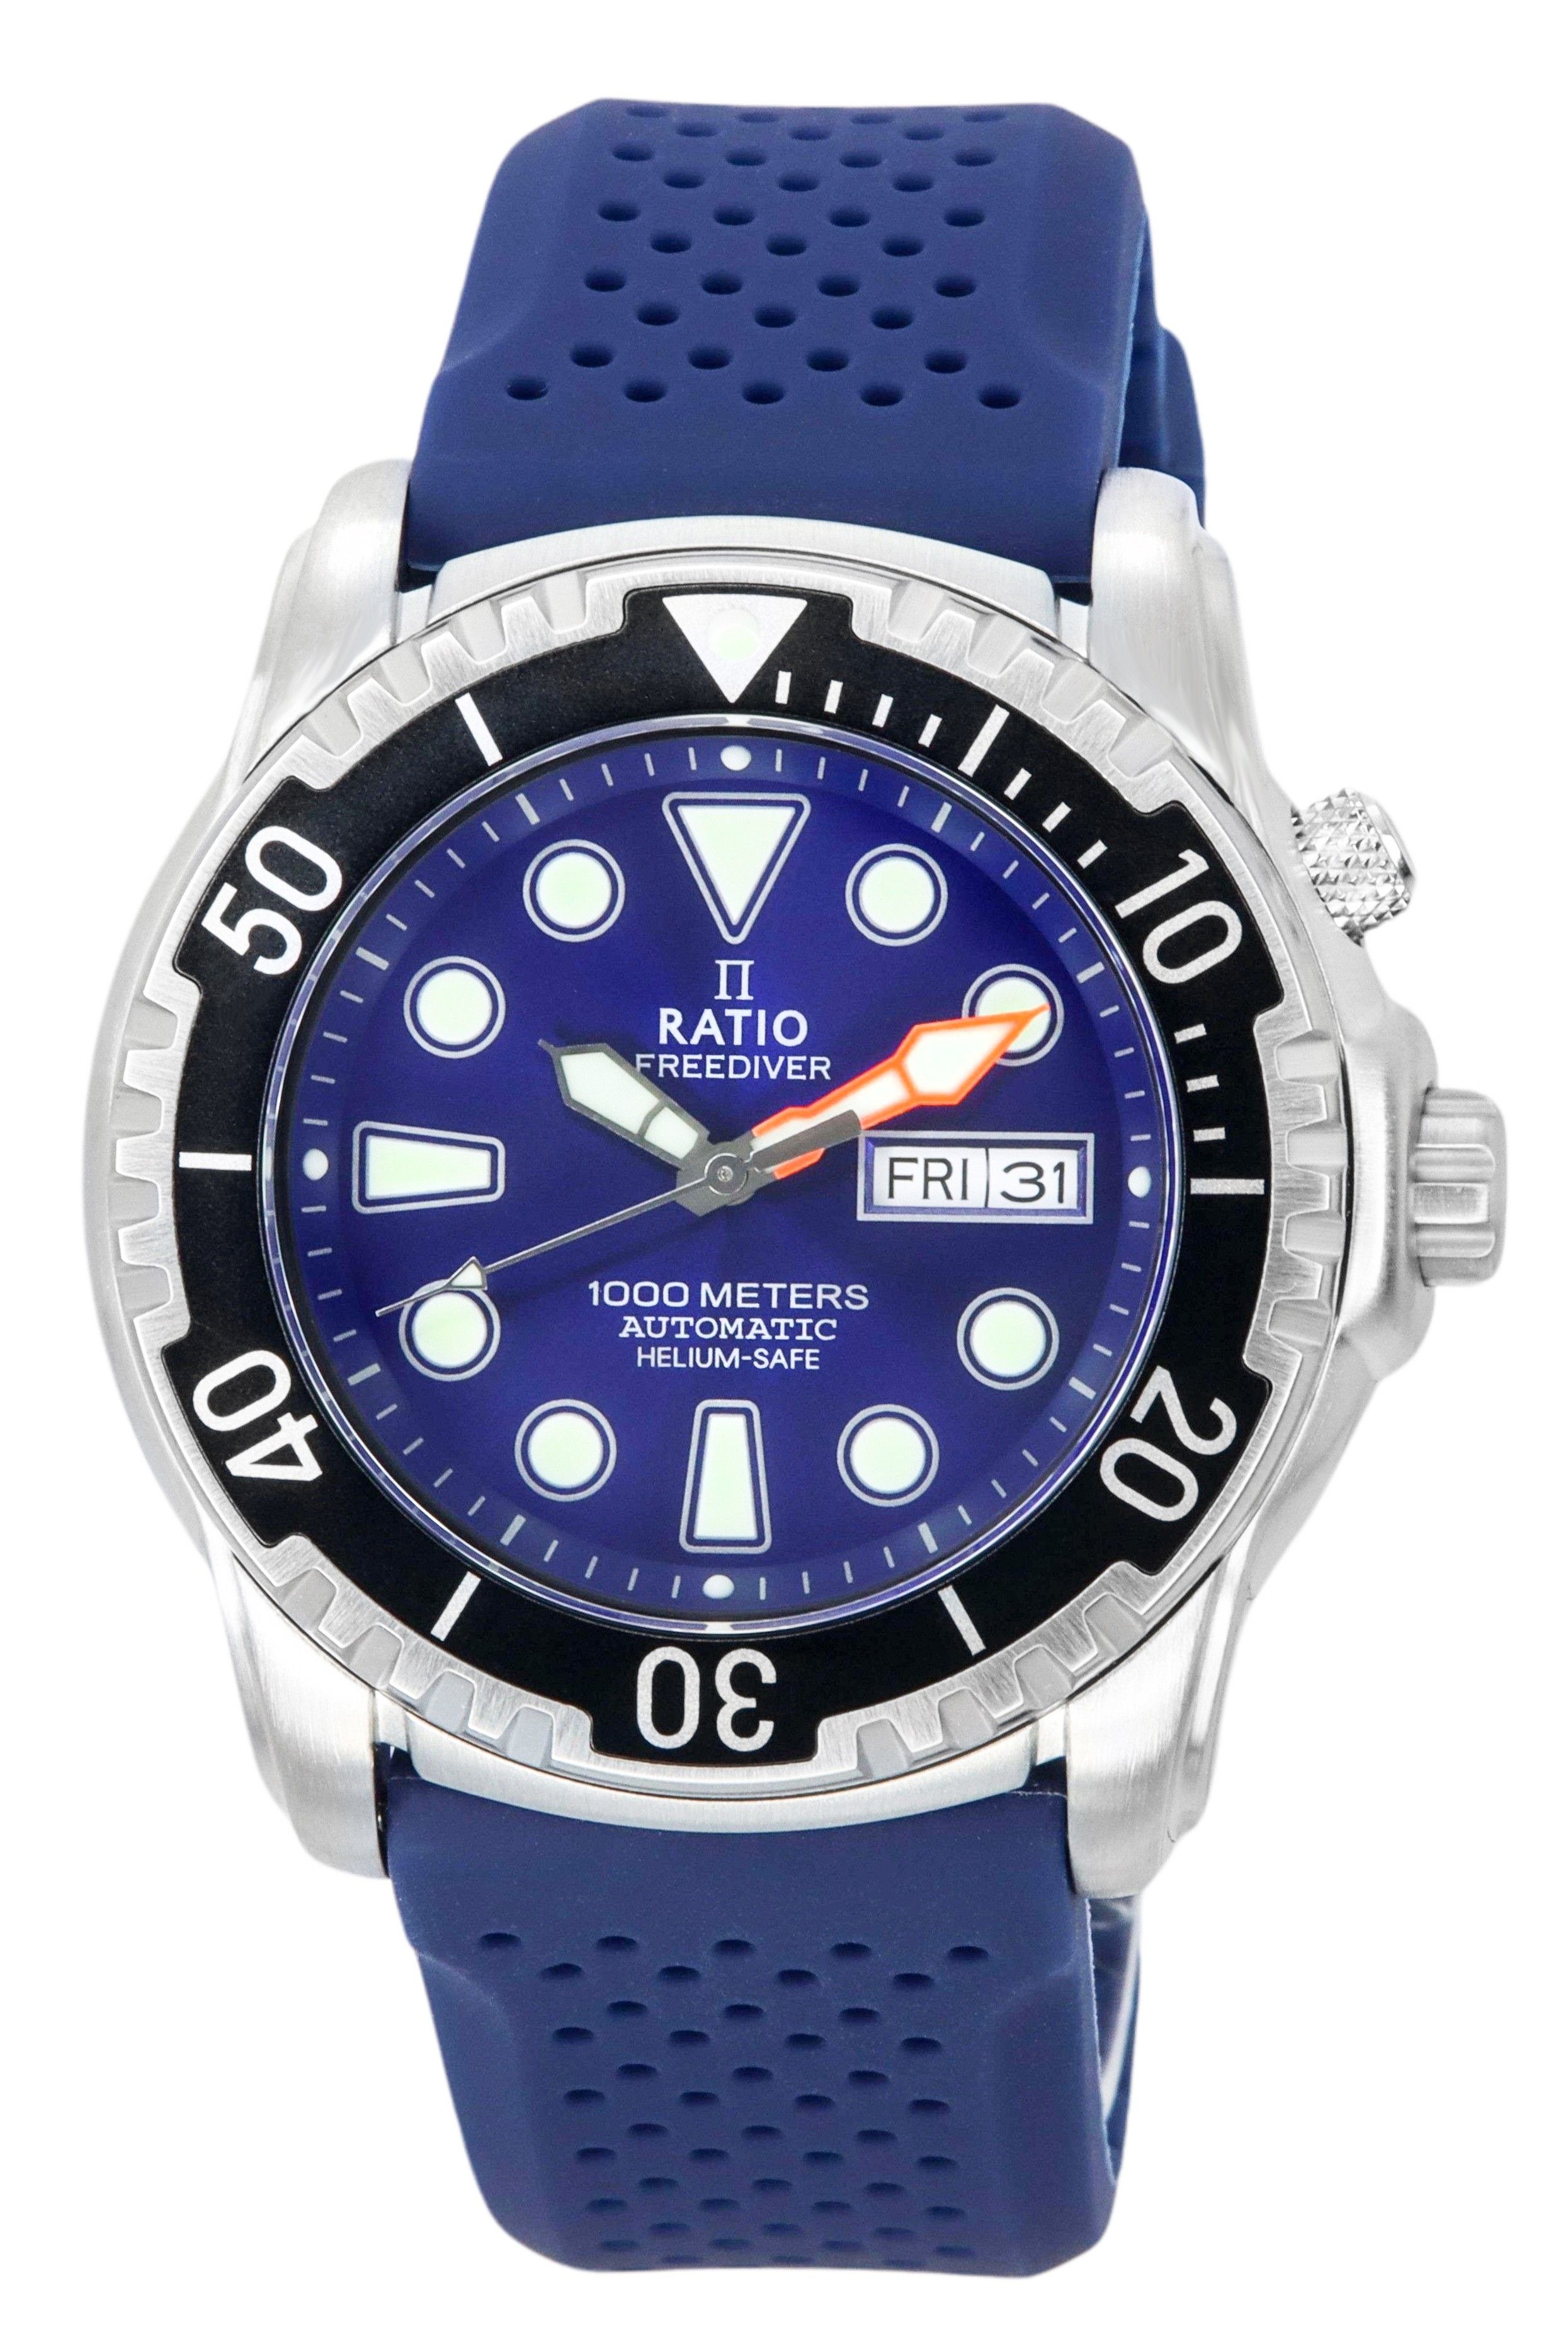 Ratio FreeDiver Helium-Safe 1000M Sapphire Automatic 1068HA90-34VA-BLU Men's Watch